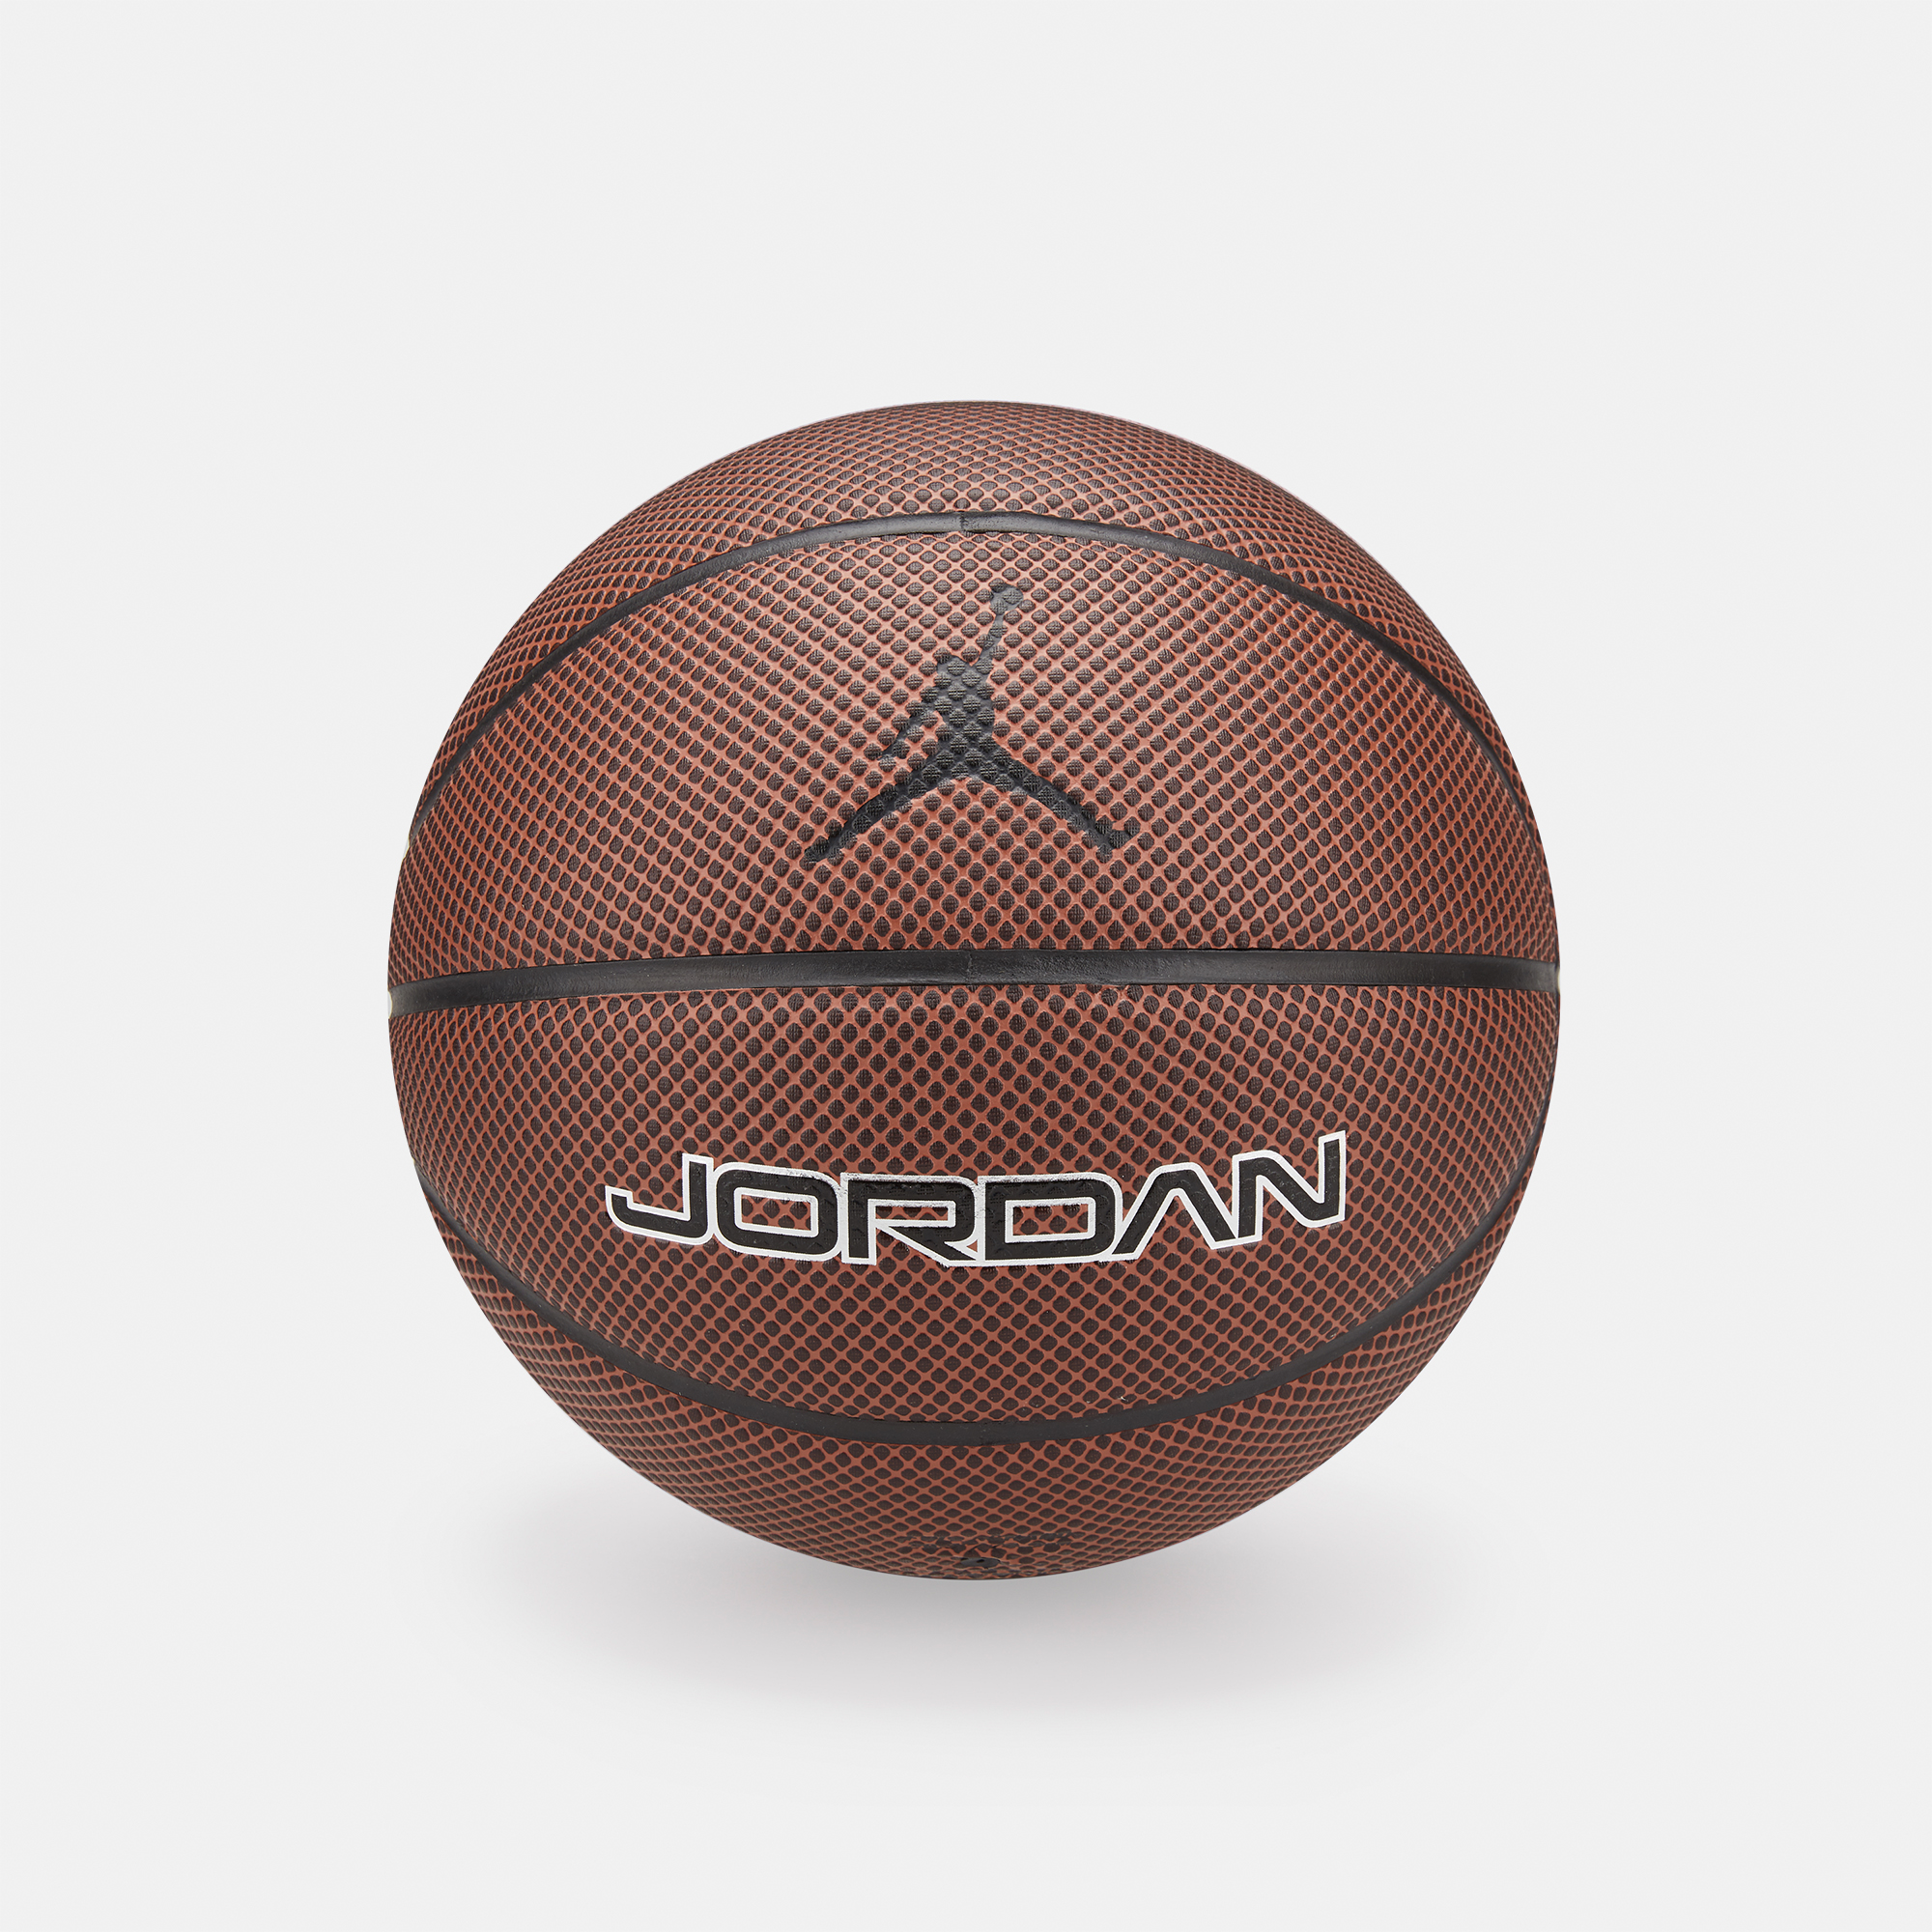 Jordan Men's Legacy 8-Panel Basketball | Sports Equipment | Equipment ...